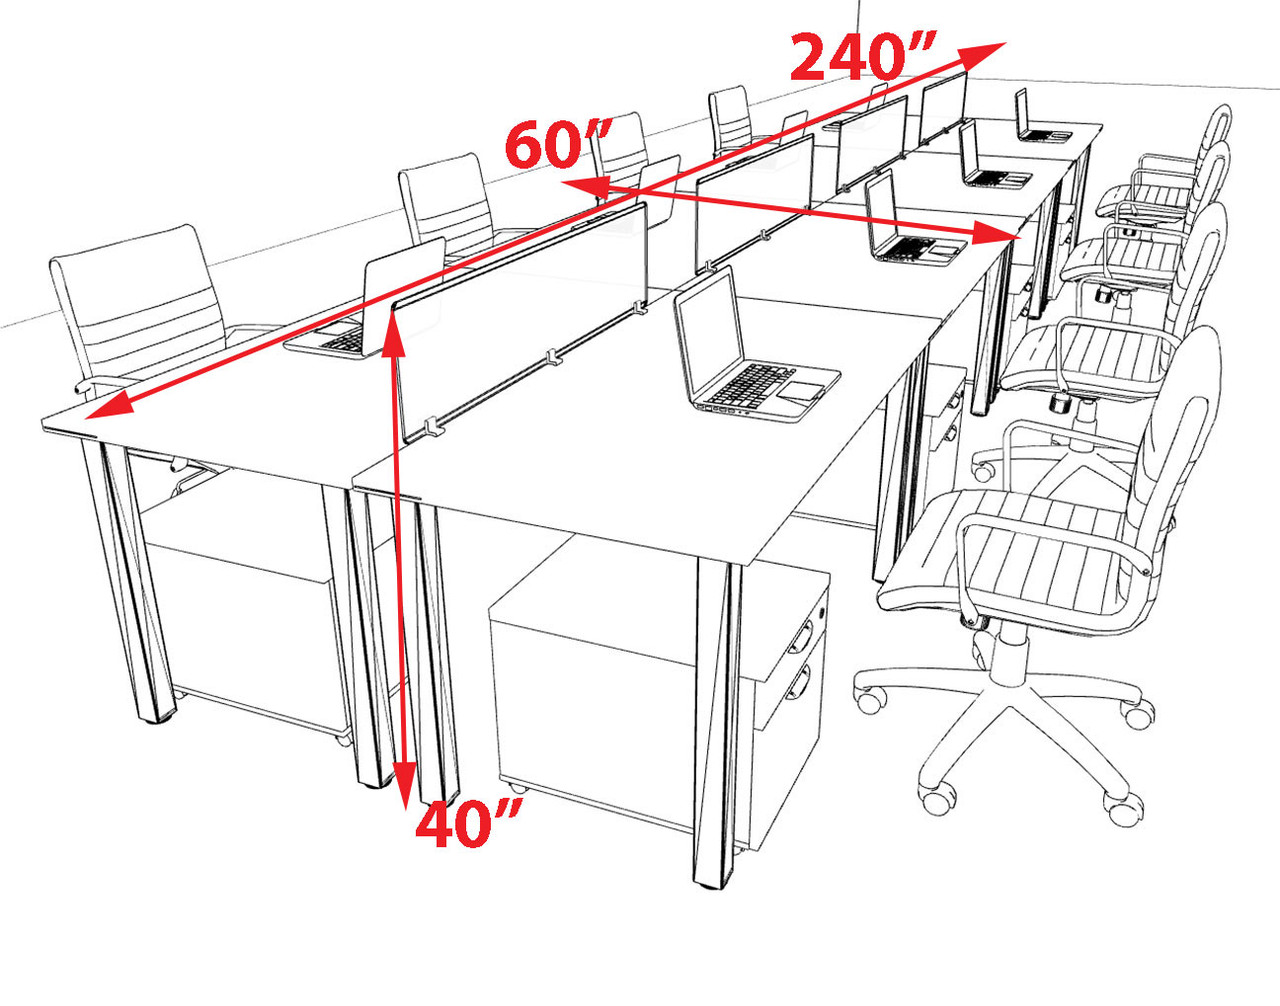 8 Person Modern  Metal Leg Office Workstation Desk Set, #OT-SUL-FPM61